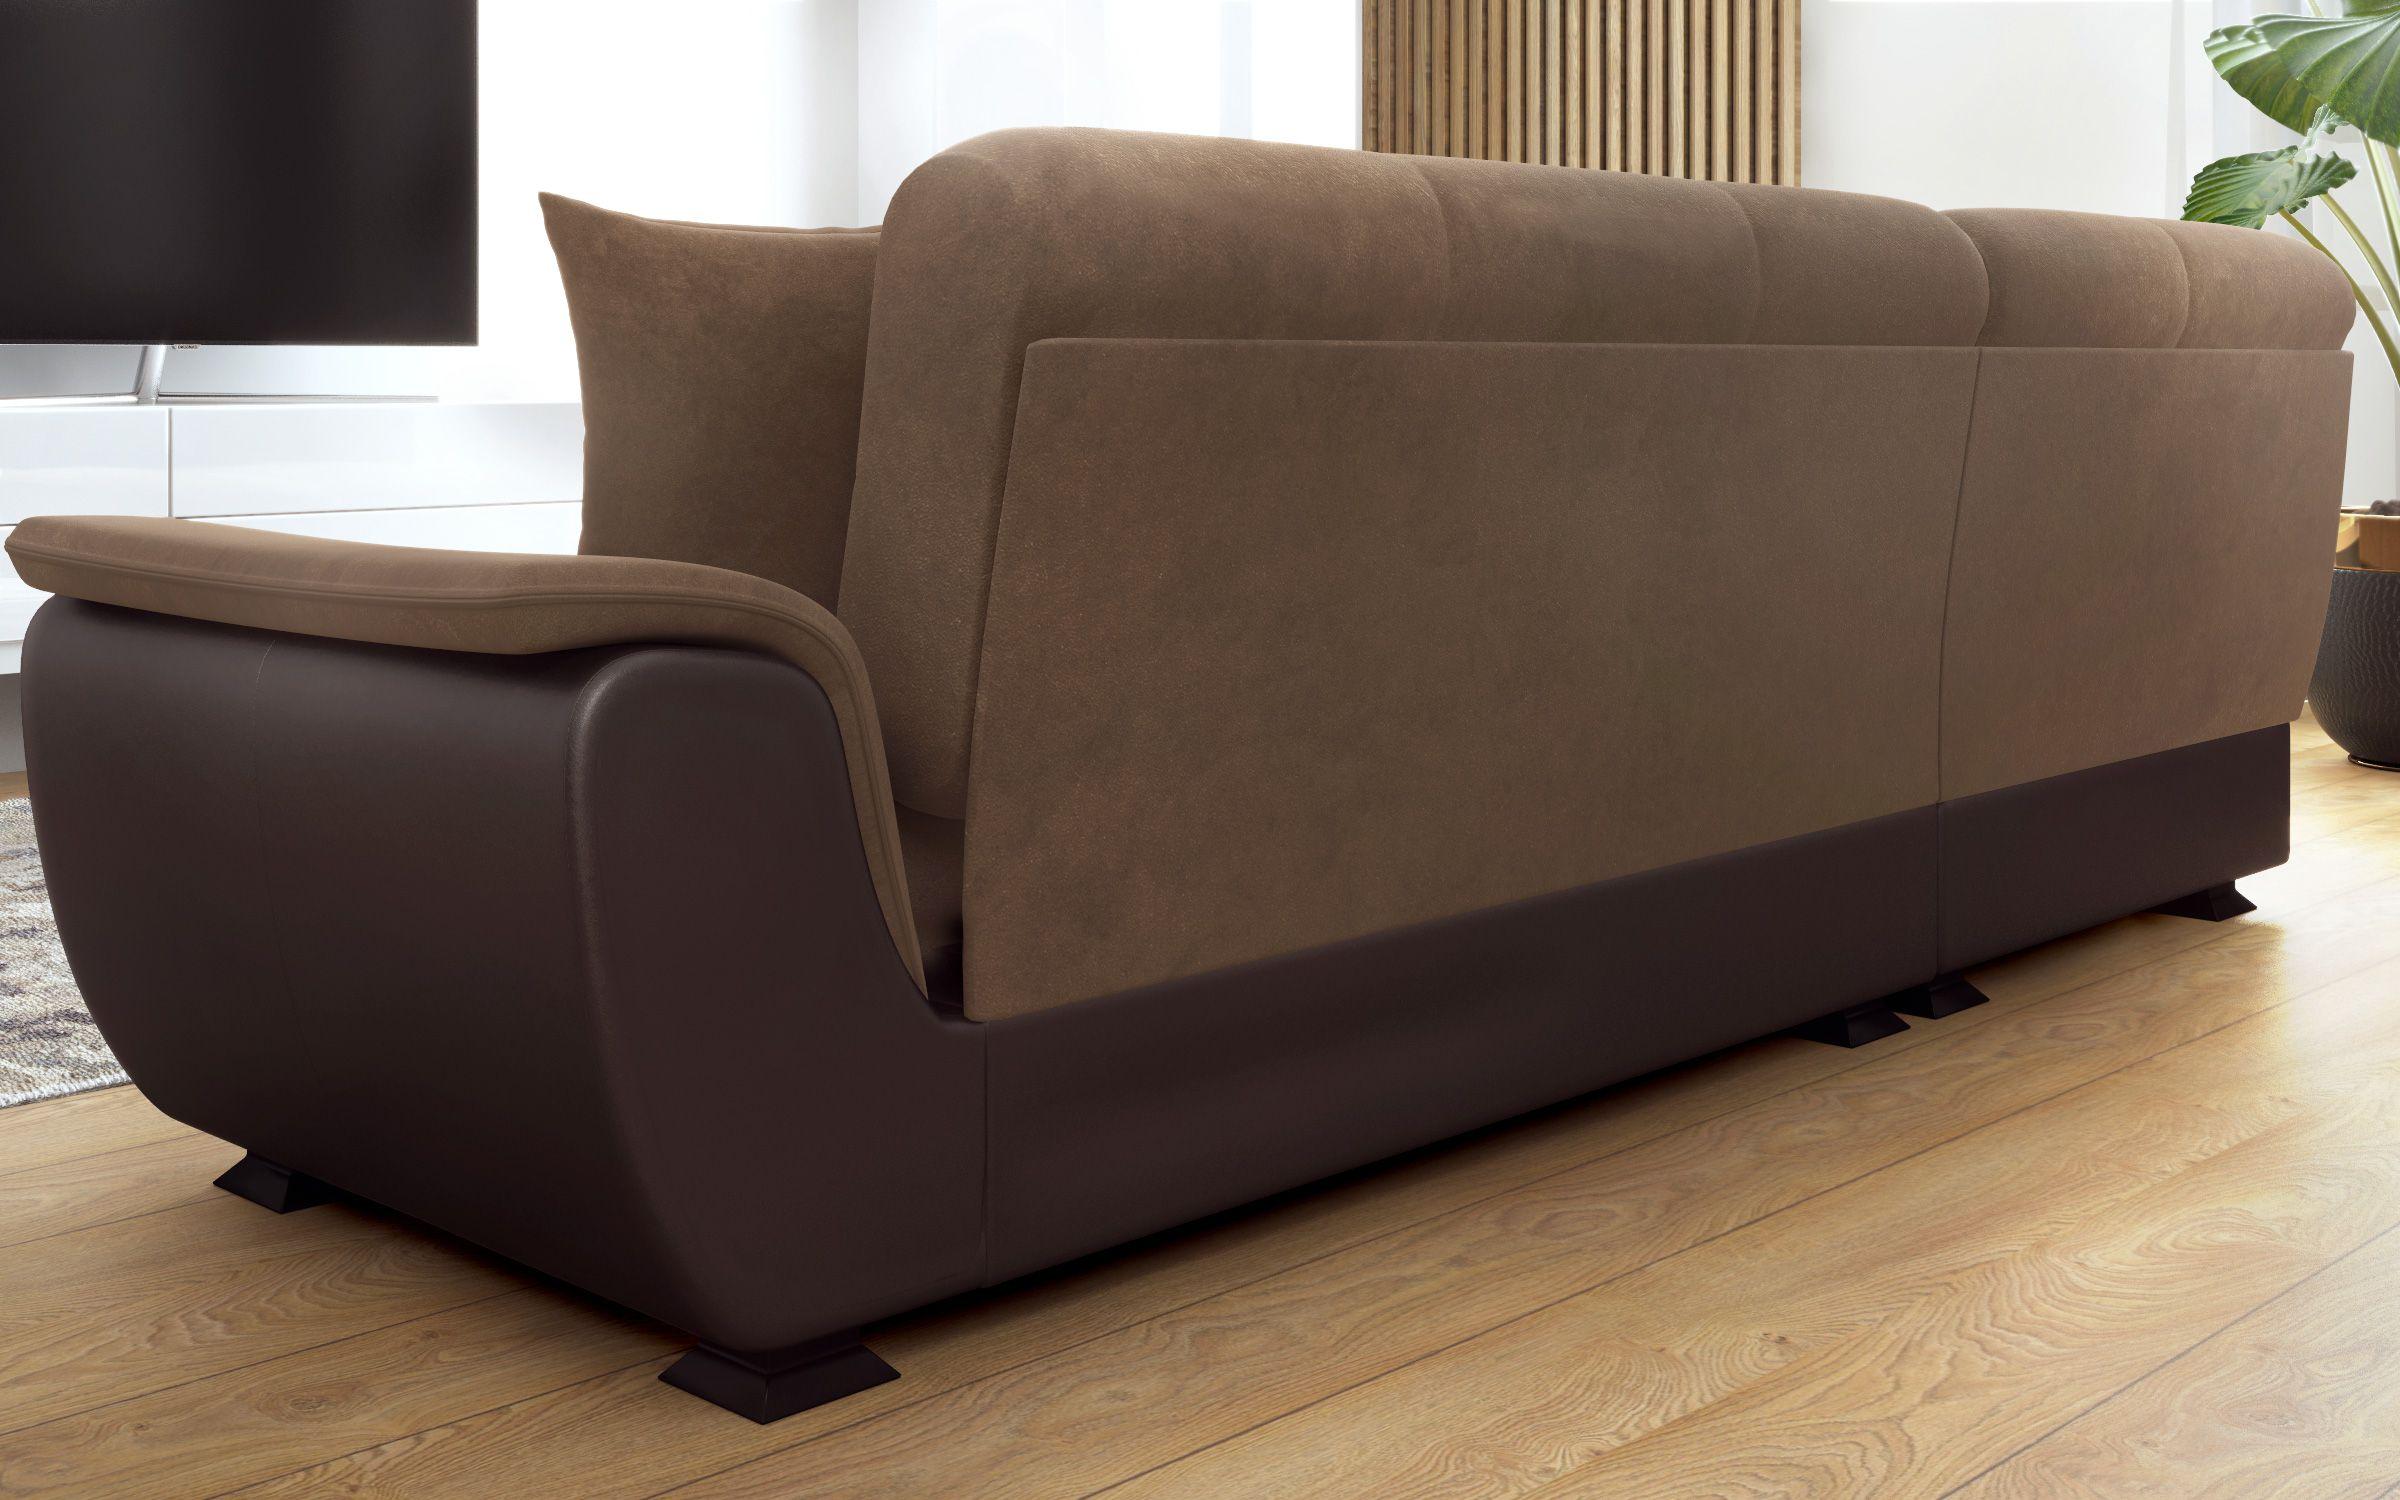 Kλικ - κλακ καναπές Princess II S + μηχανισμός, ανοιχτό καφέ + καφέ δέρμα  7